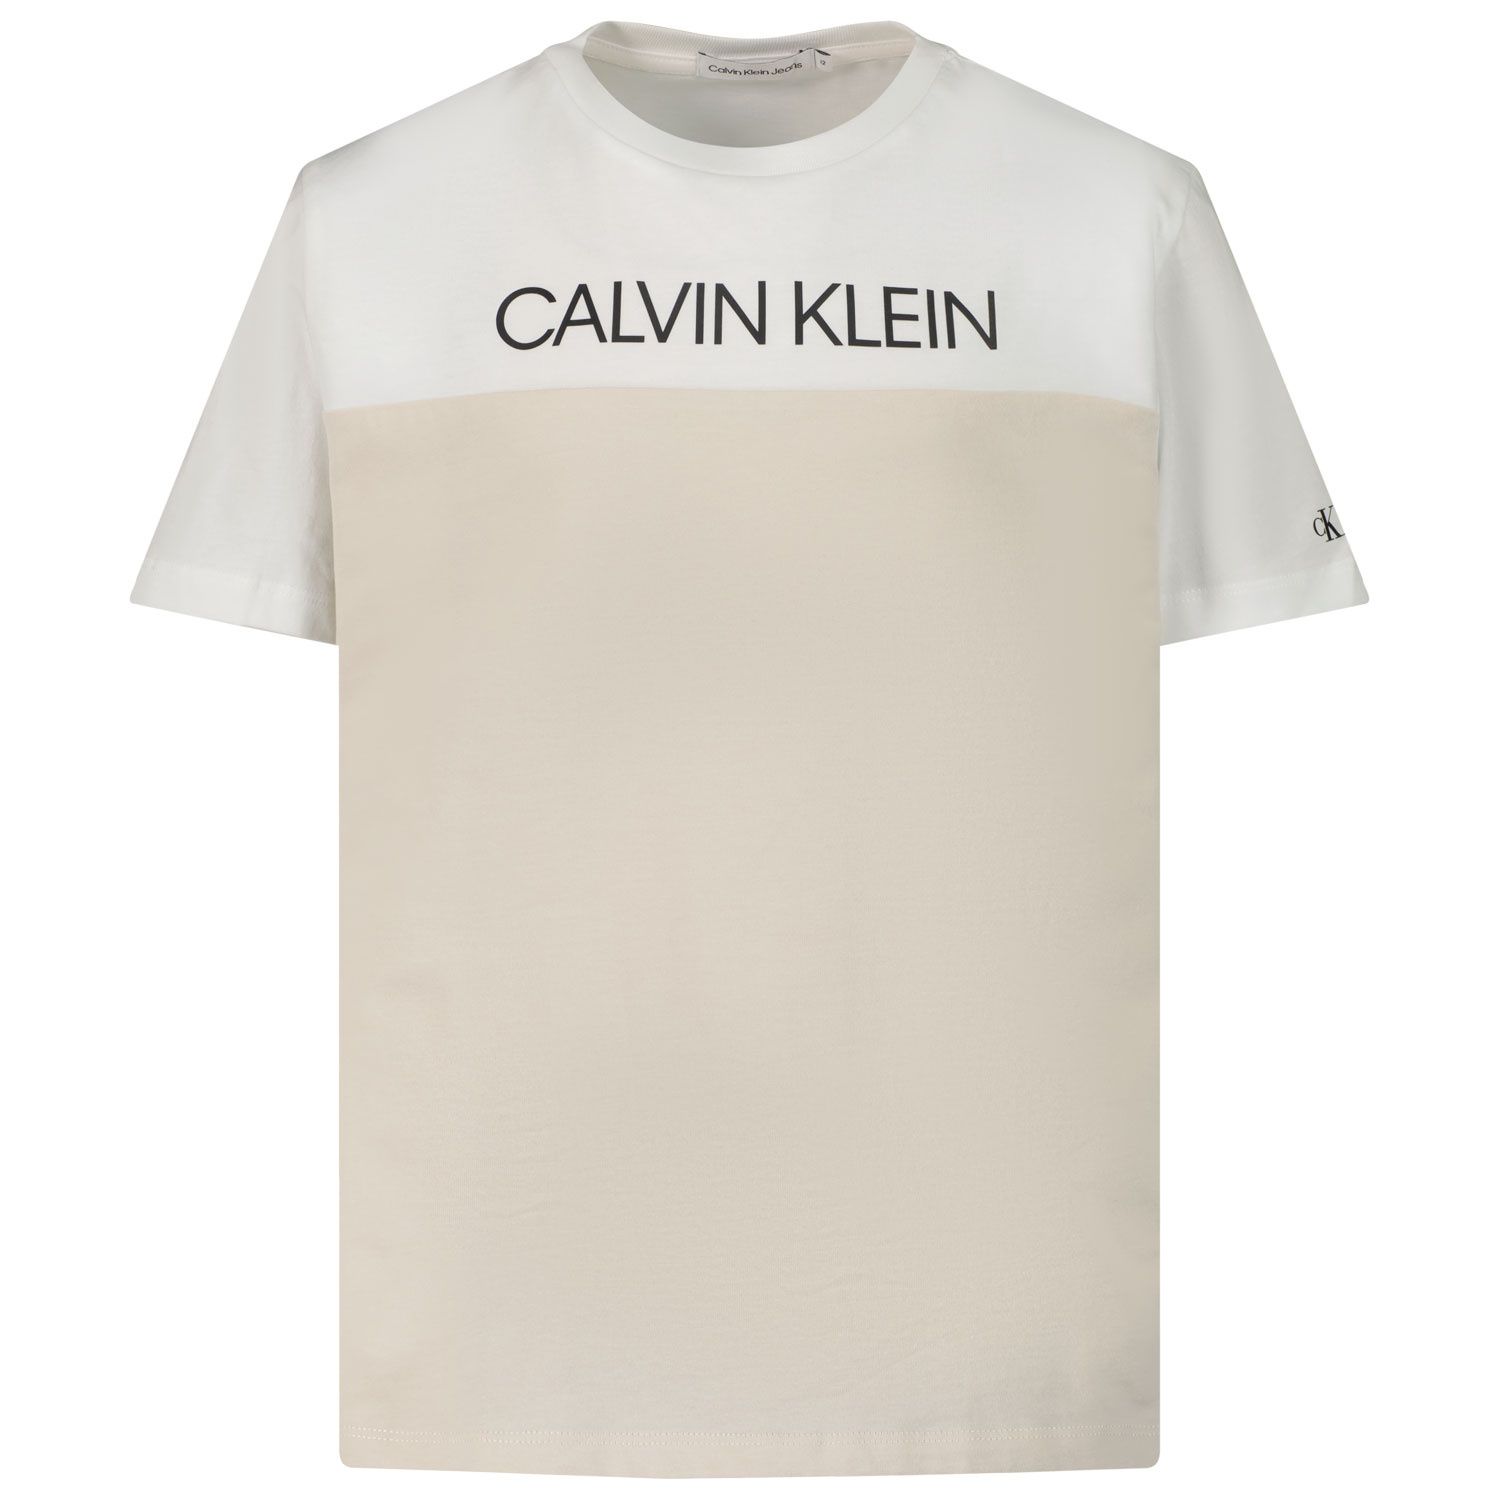 Picture of Calvin Klein IB0IB00953 kids t-shirt light beige